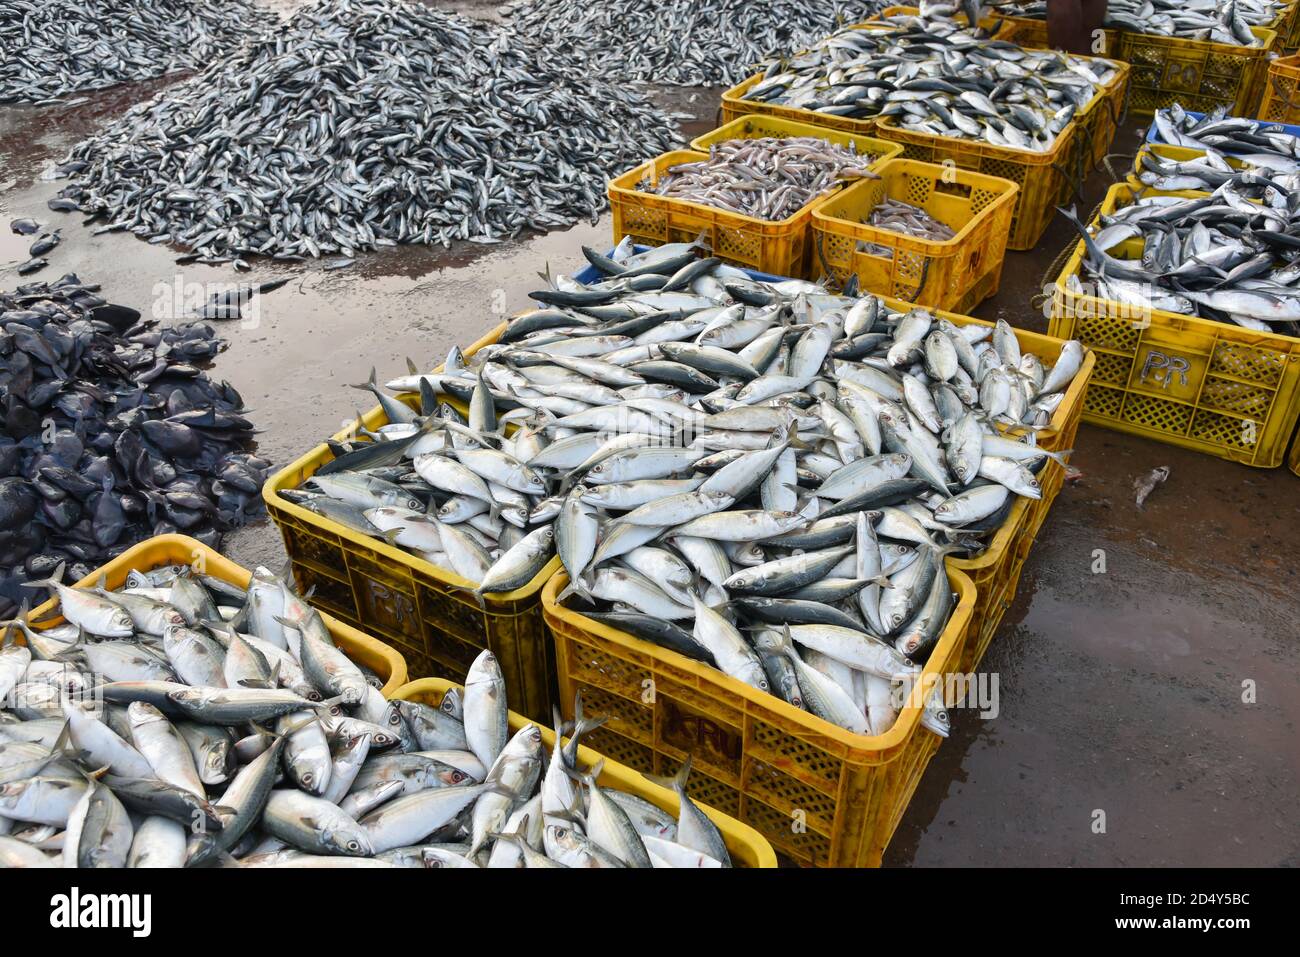 Sea food. Fish market in India. Raw Mackerel fish for sale